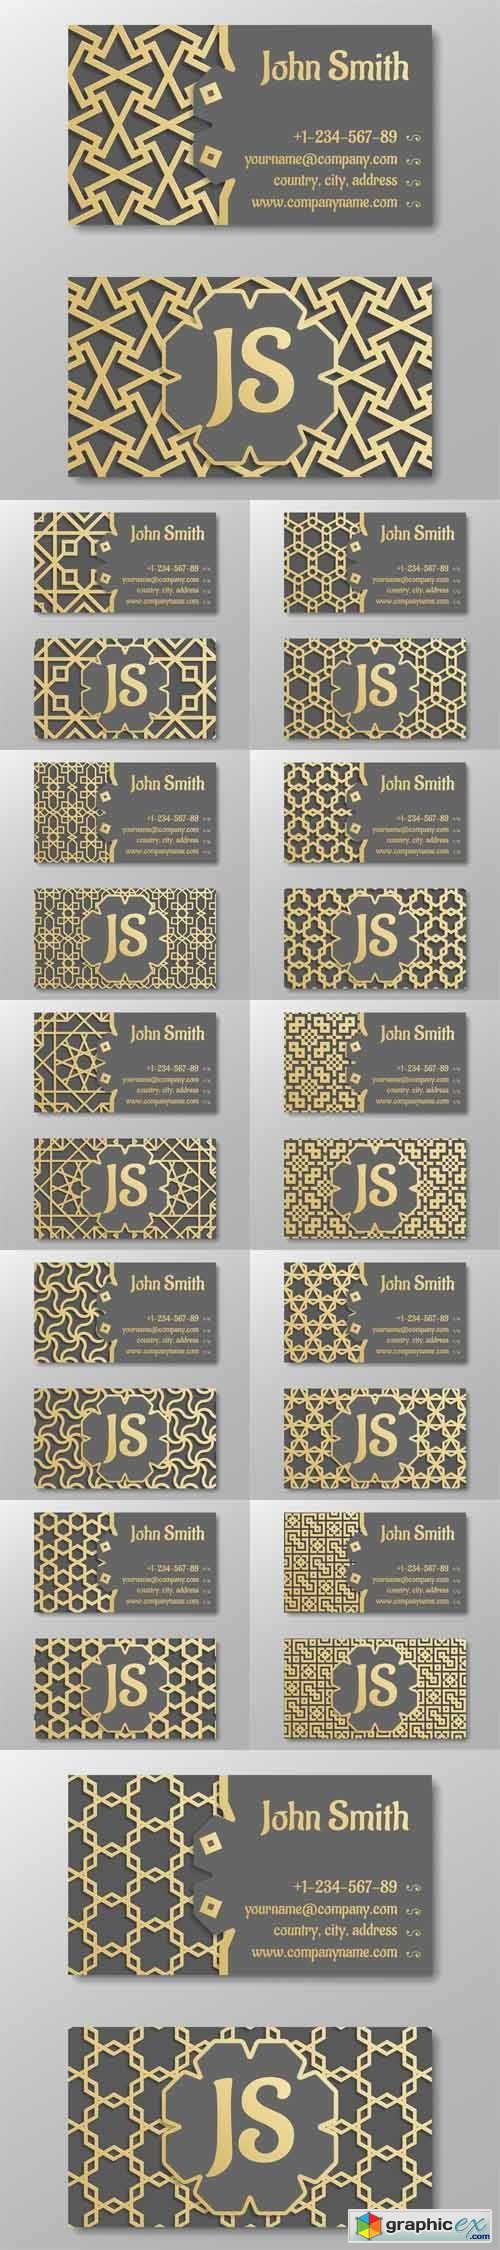 Business Card Template. Gold Arabic Pattern